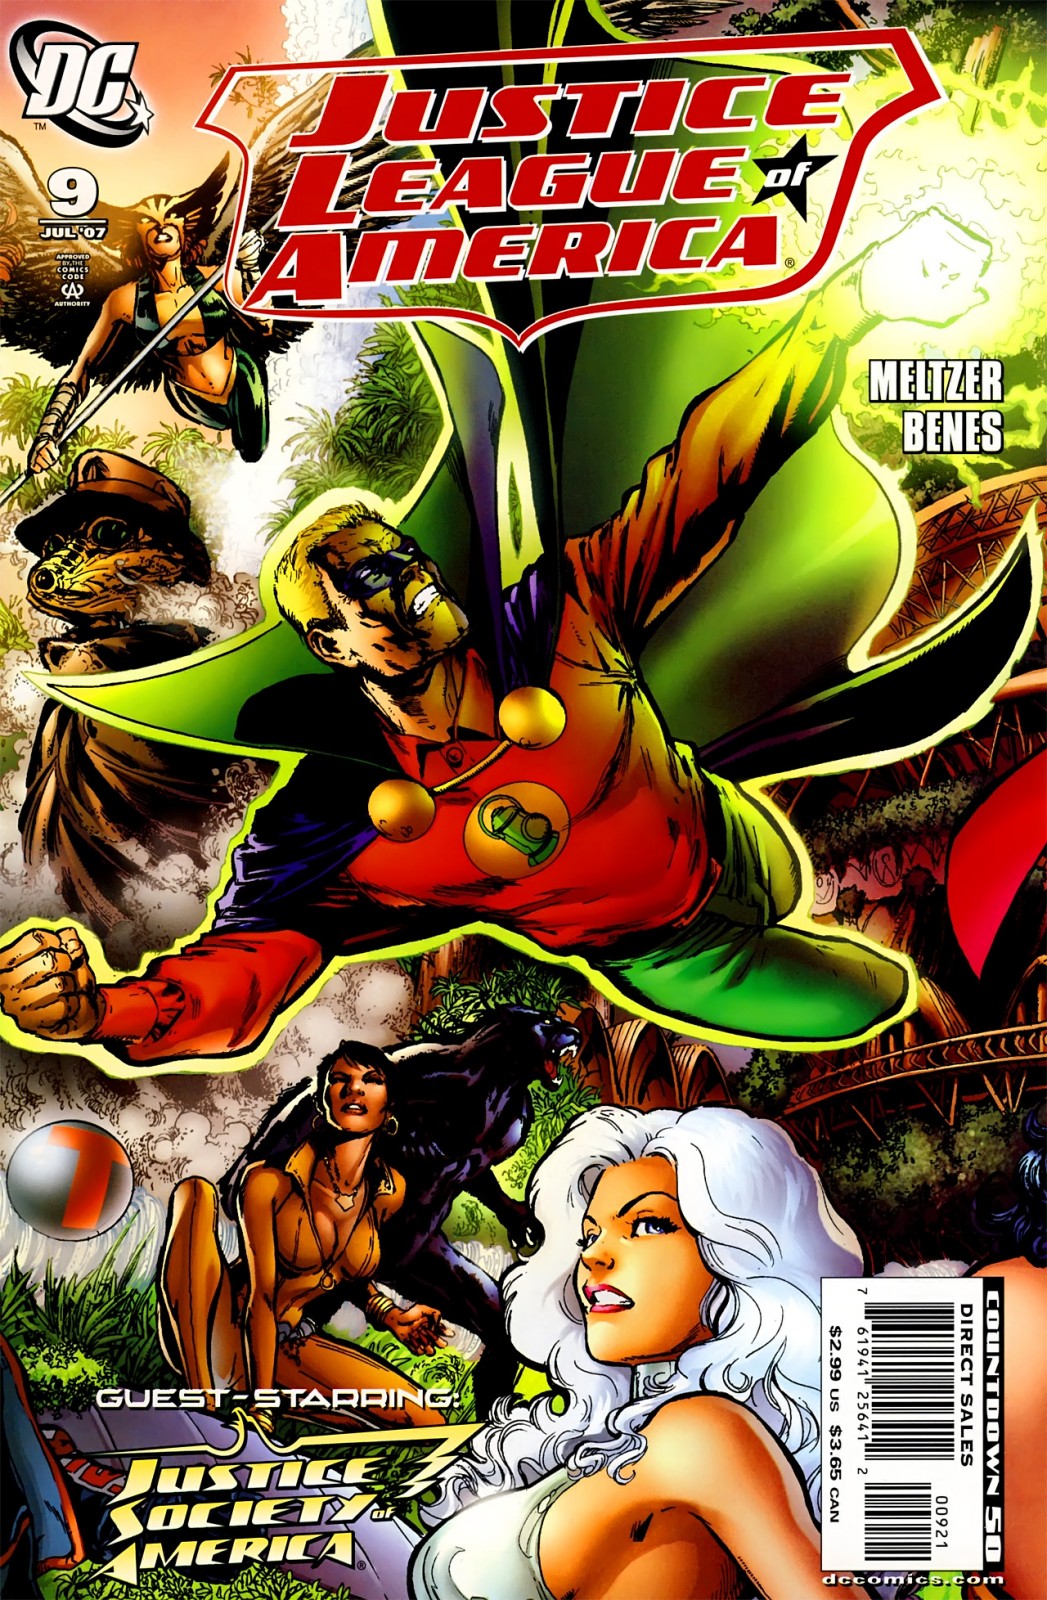 4-Justice League of America 009 (2007) (2 cvrs) (Minutemen-prometeoro)